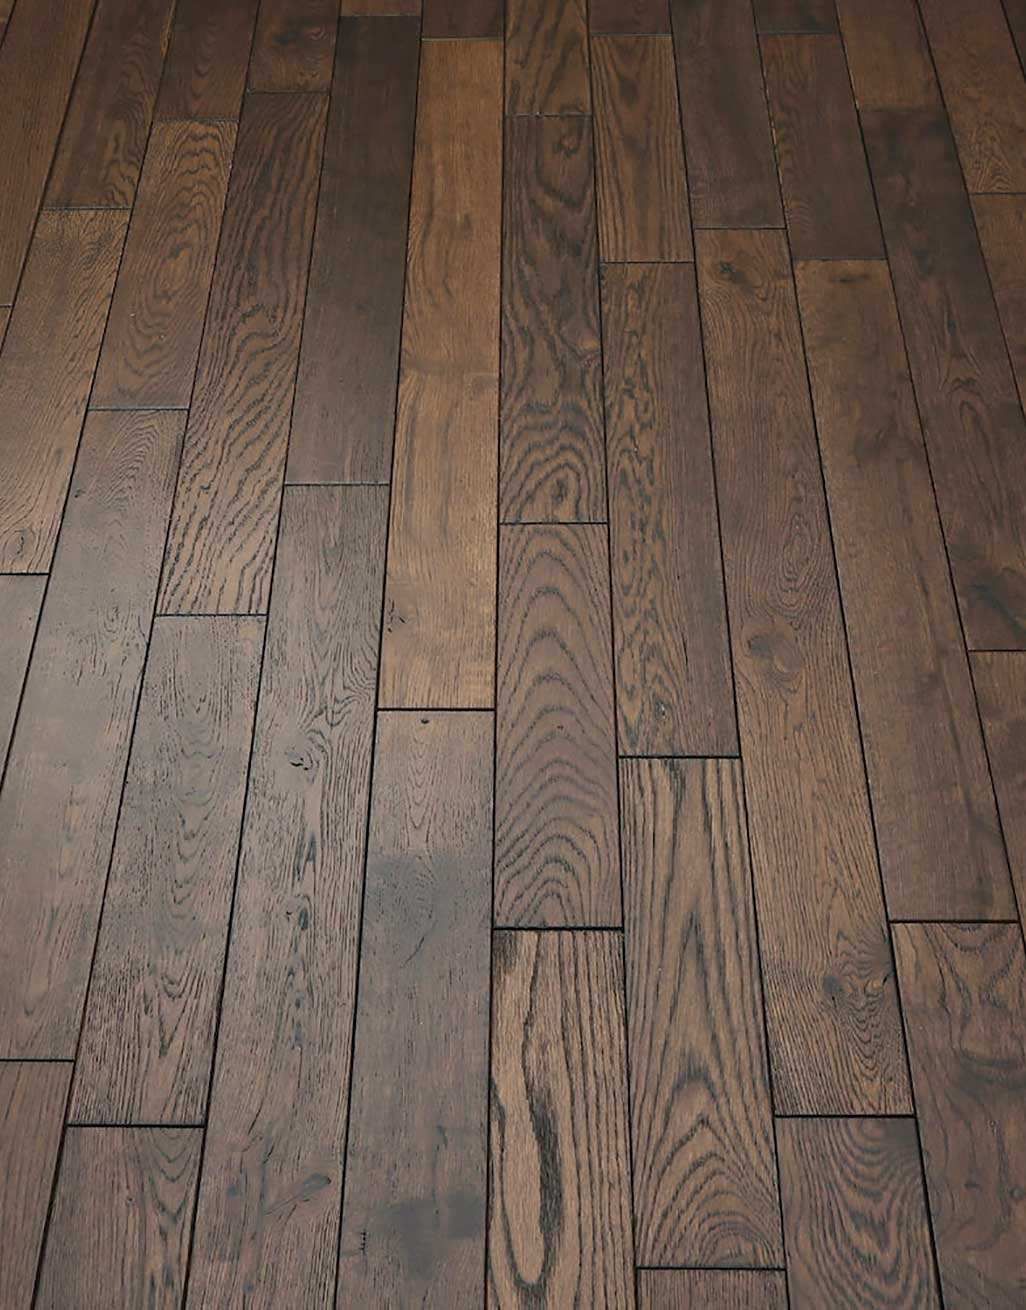 Lacquered Solid Wood Flooring, Espresso Hardwood Floors